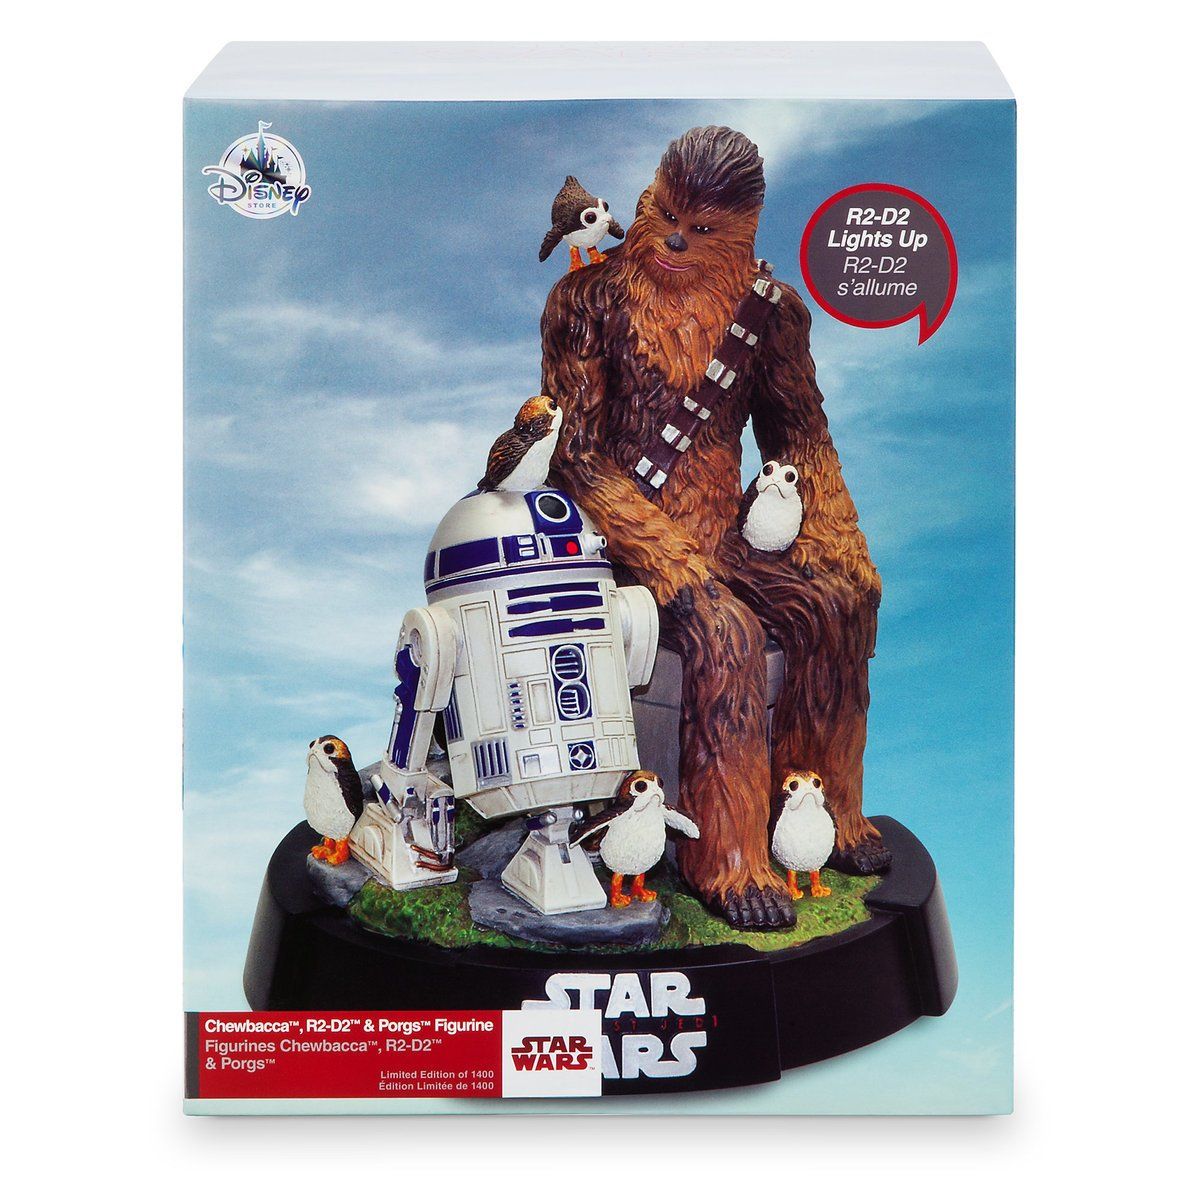 Star Wars The Last Jedi Chewbacca R2D2 Porgs Limited Edition Figurine #366/1400 